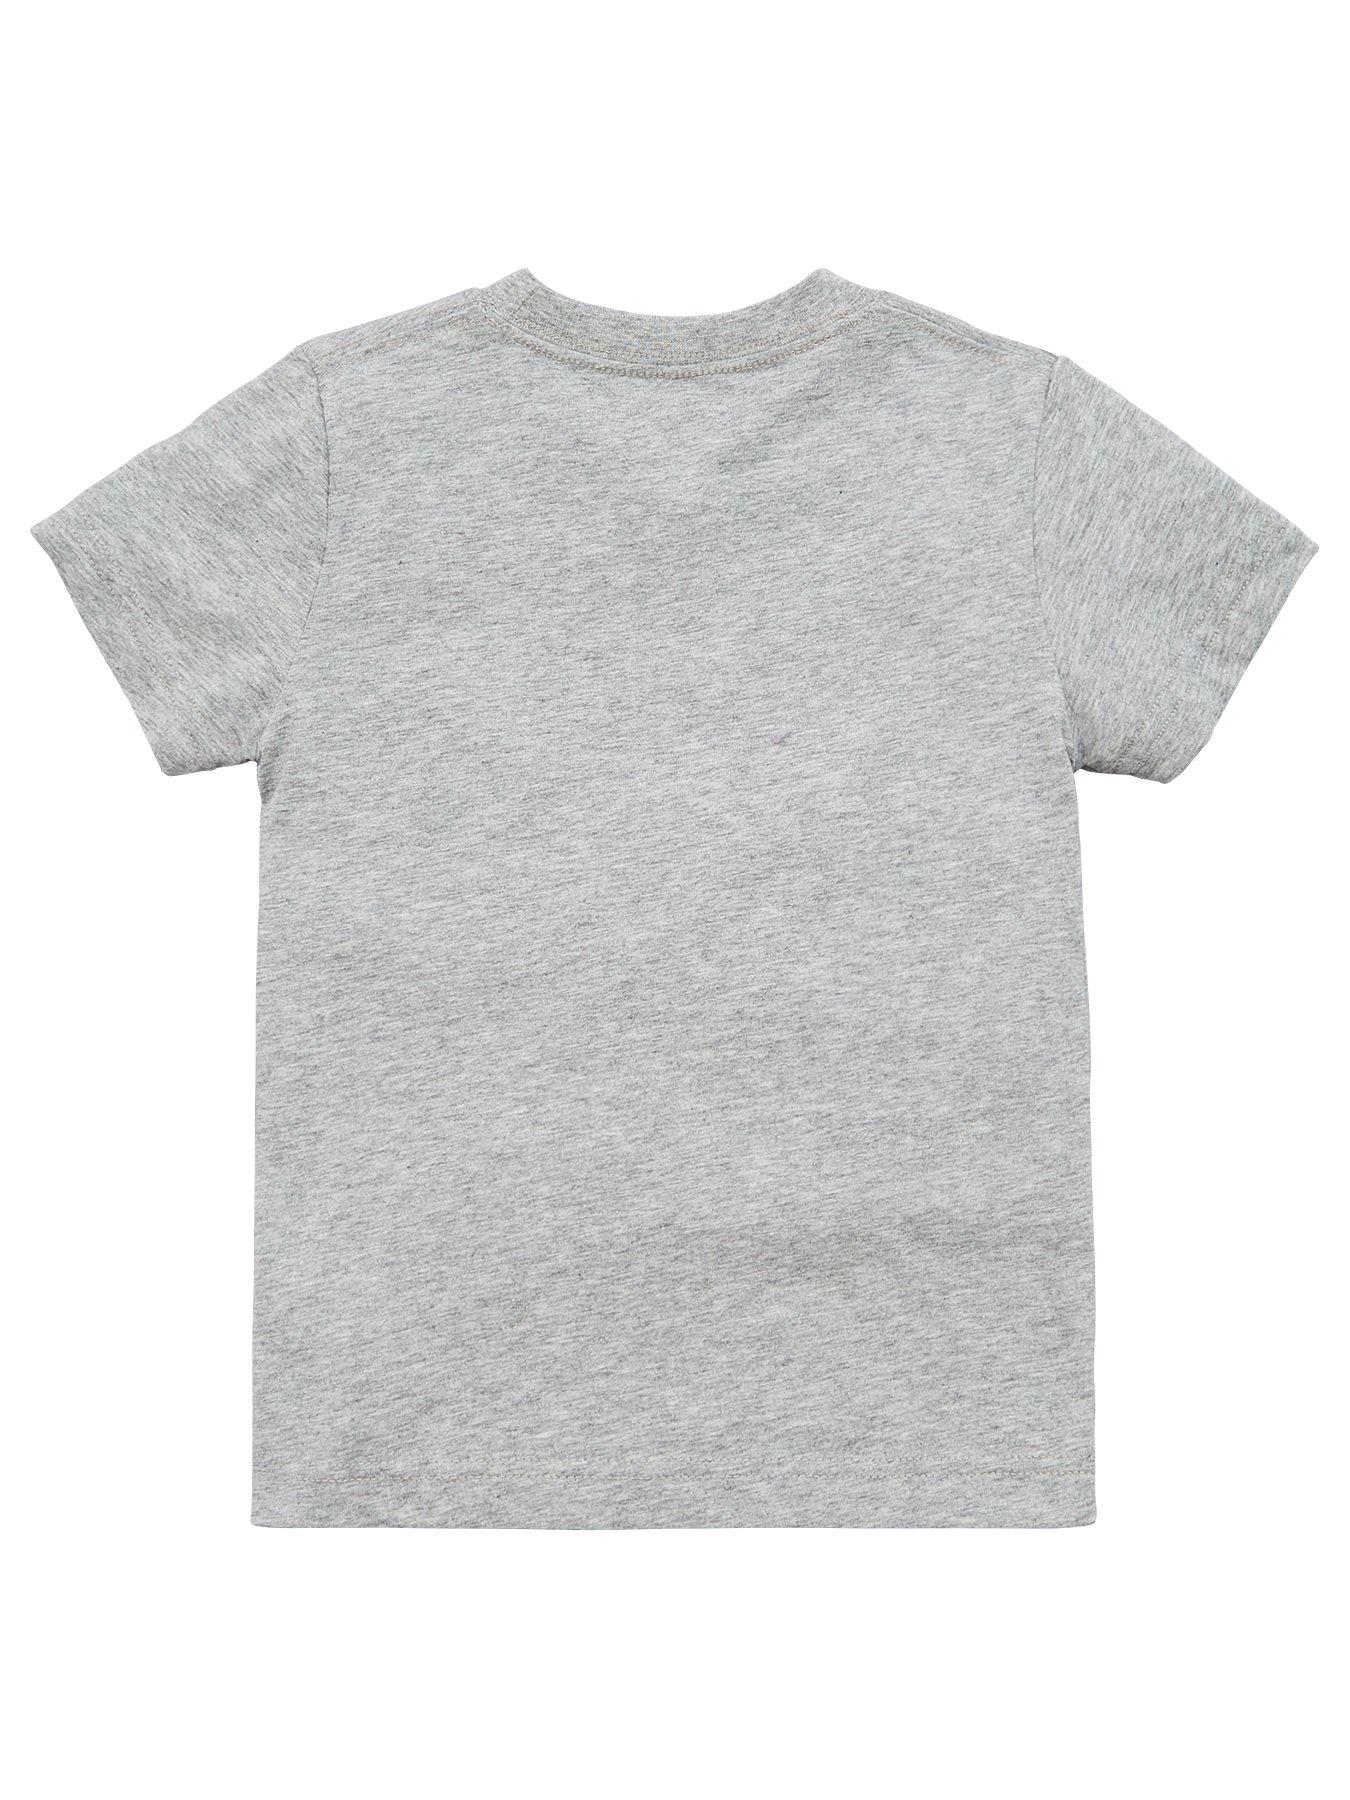 Patch T-Shirt Boys Converse Grey Dark Chuck - Kids